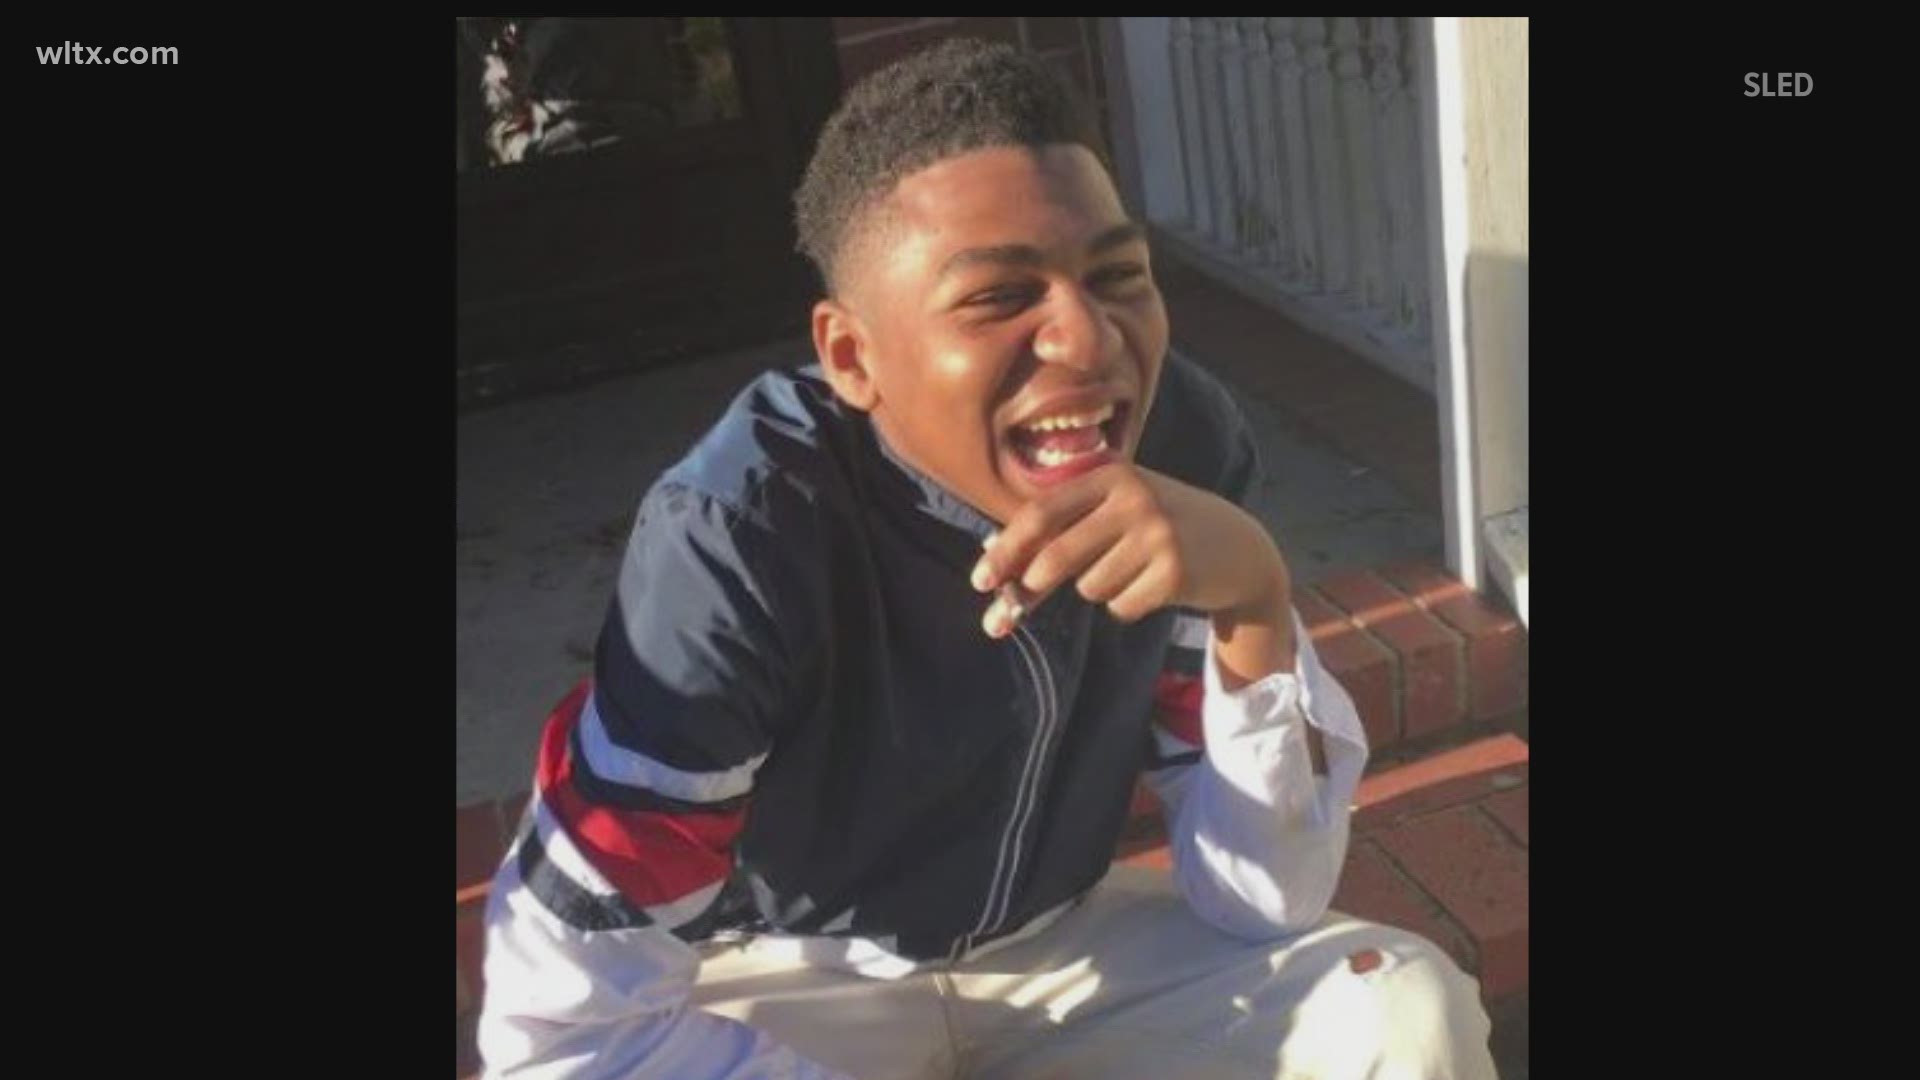 Zaki Lovely was shot outside his Bishopville home on September 9.